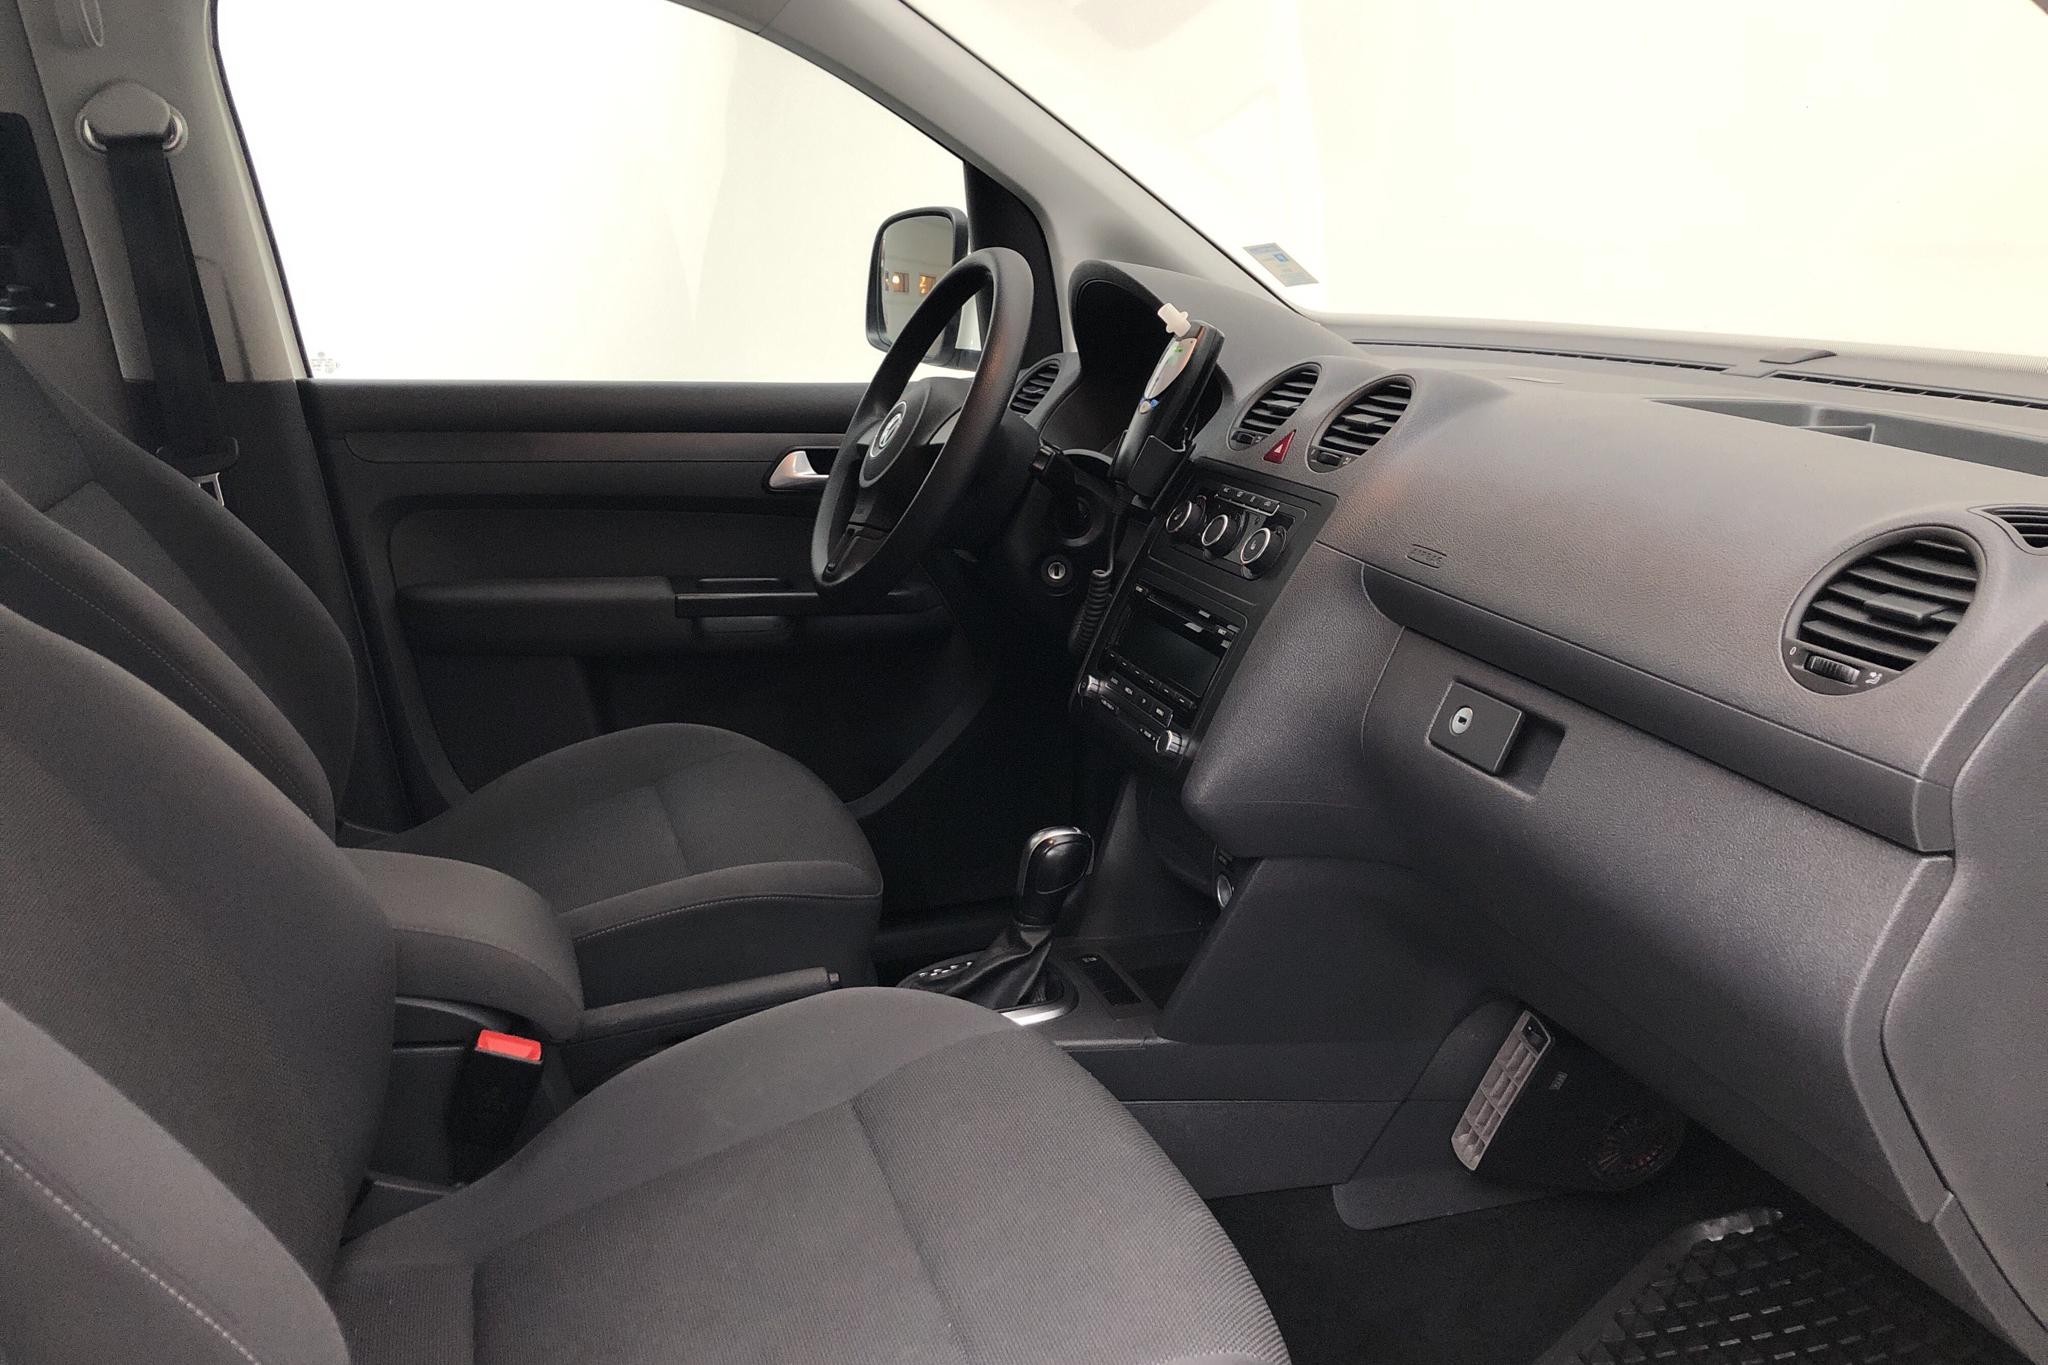 VW Caddy MPV Maxi 1.6 TDI (102hk) - 85 870 km - Automatic - white - 2015